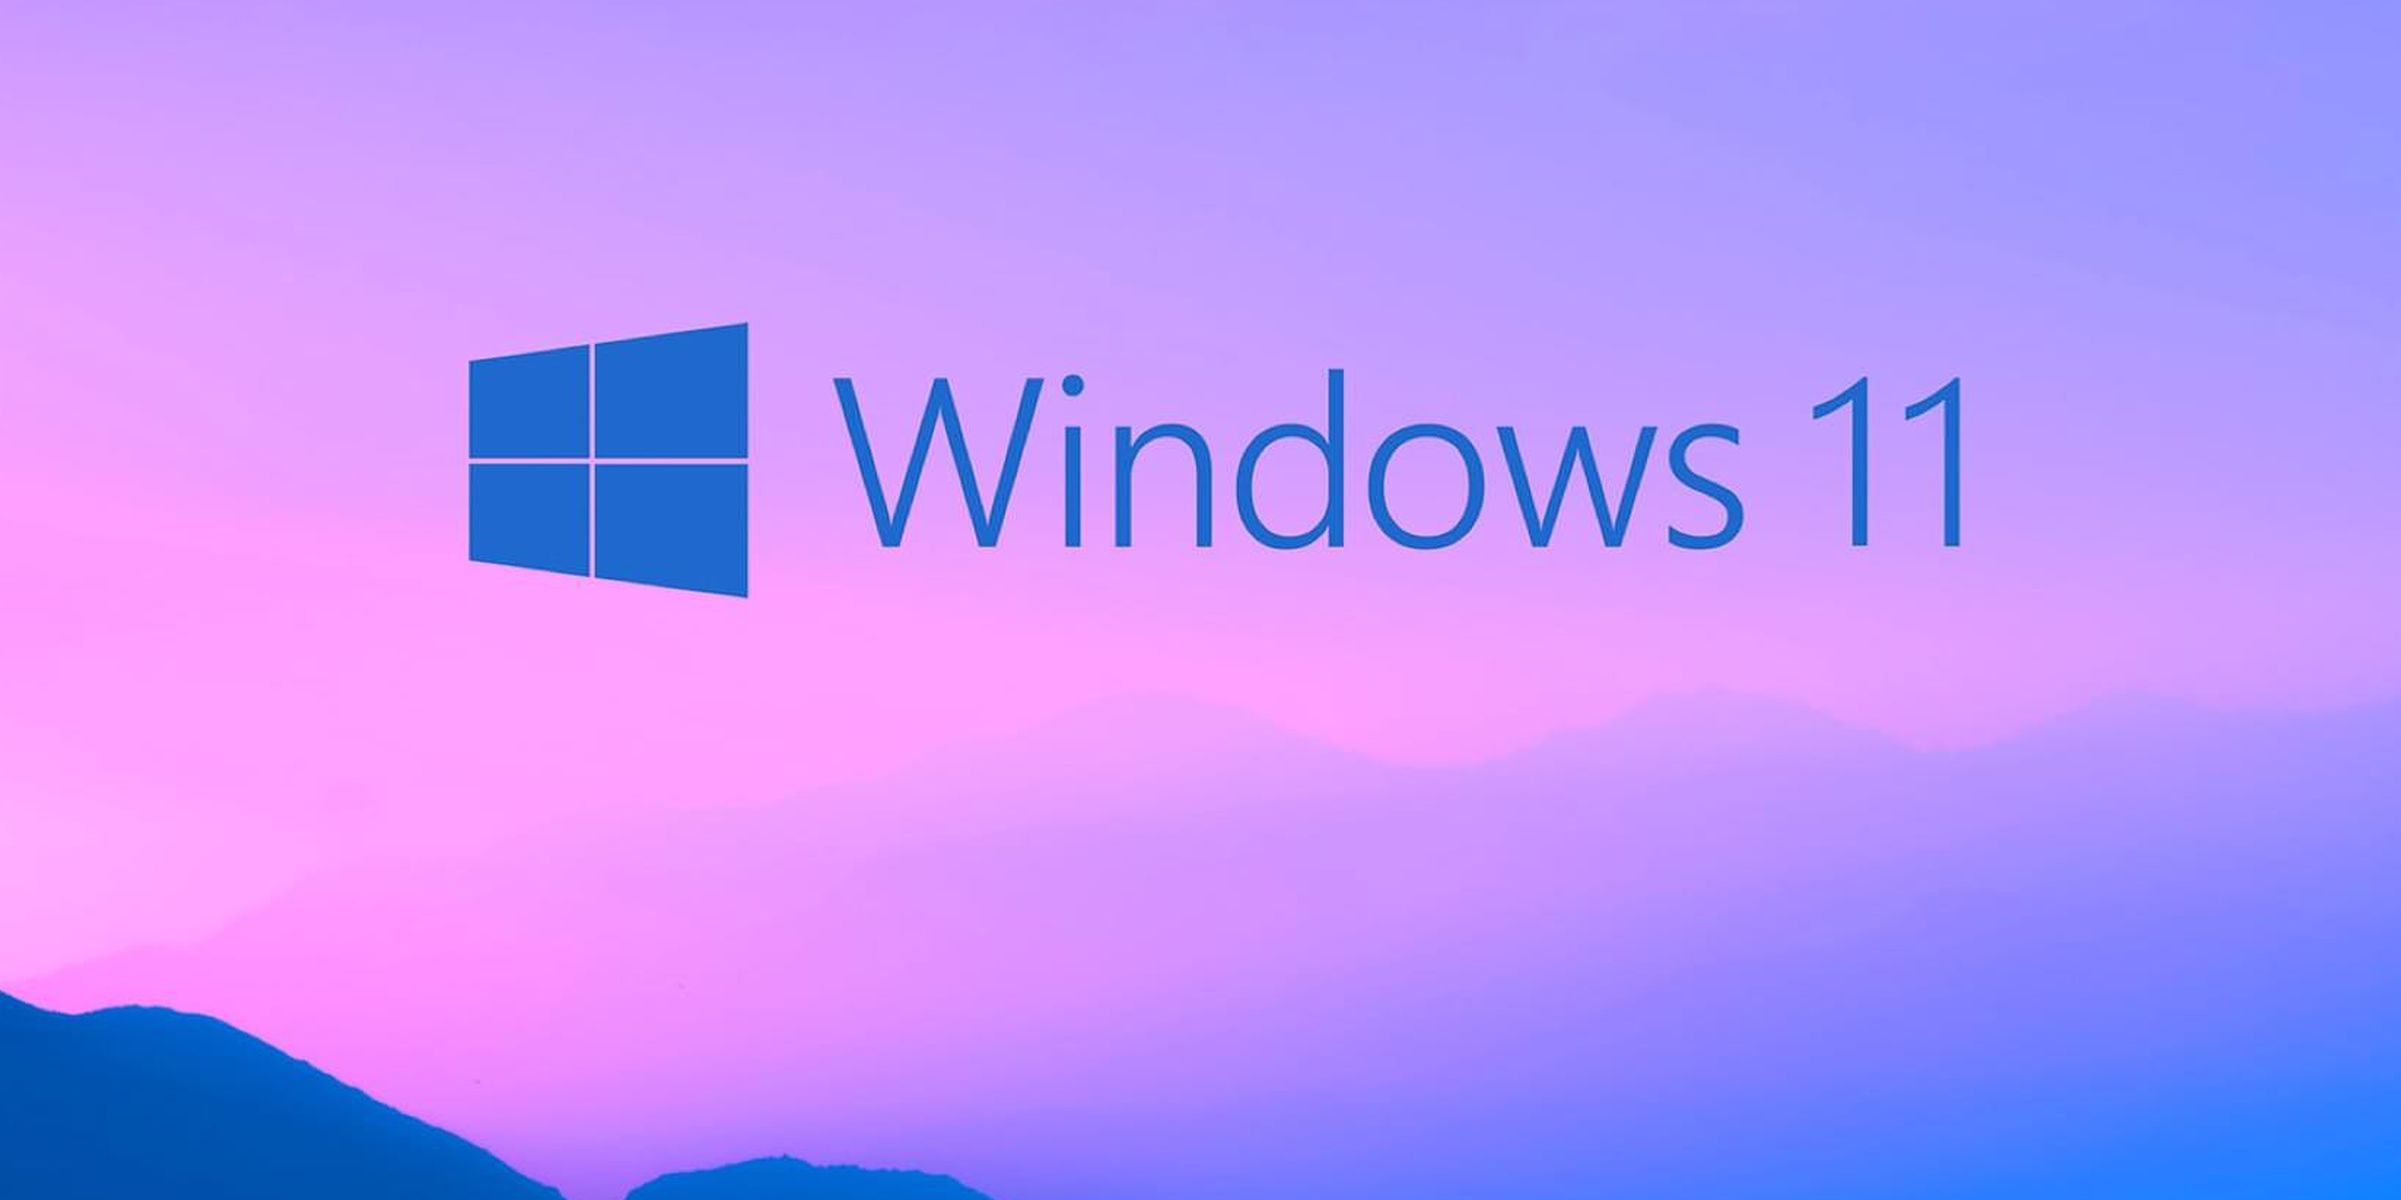 Презентации windows 11. Windows 11 Pro. Шиндовс 11. Картинки Windows 11. Windows oboy.